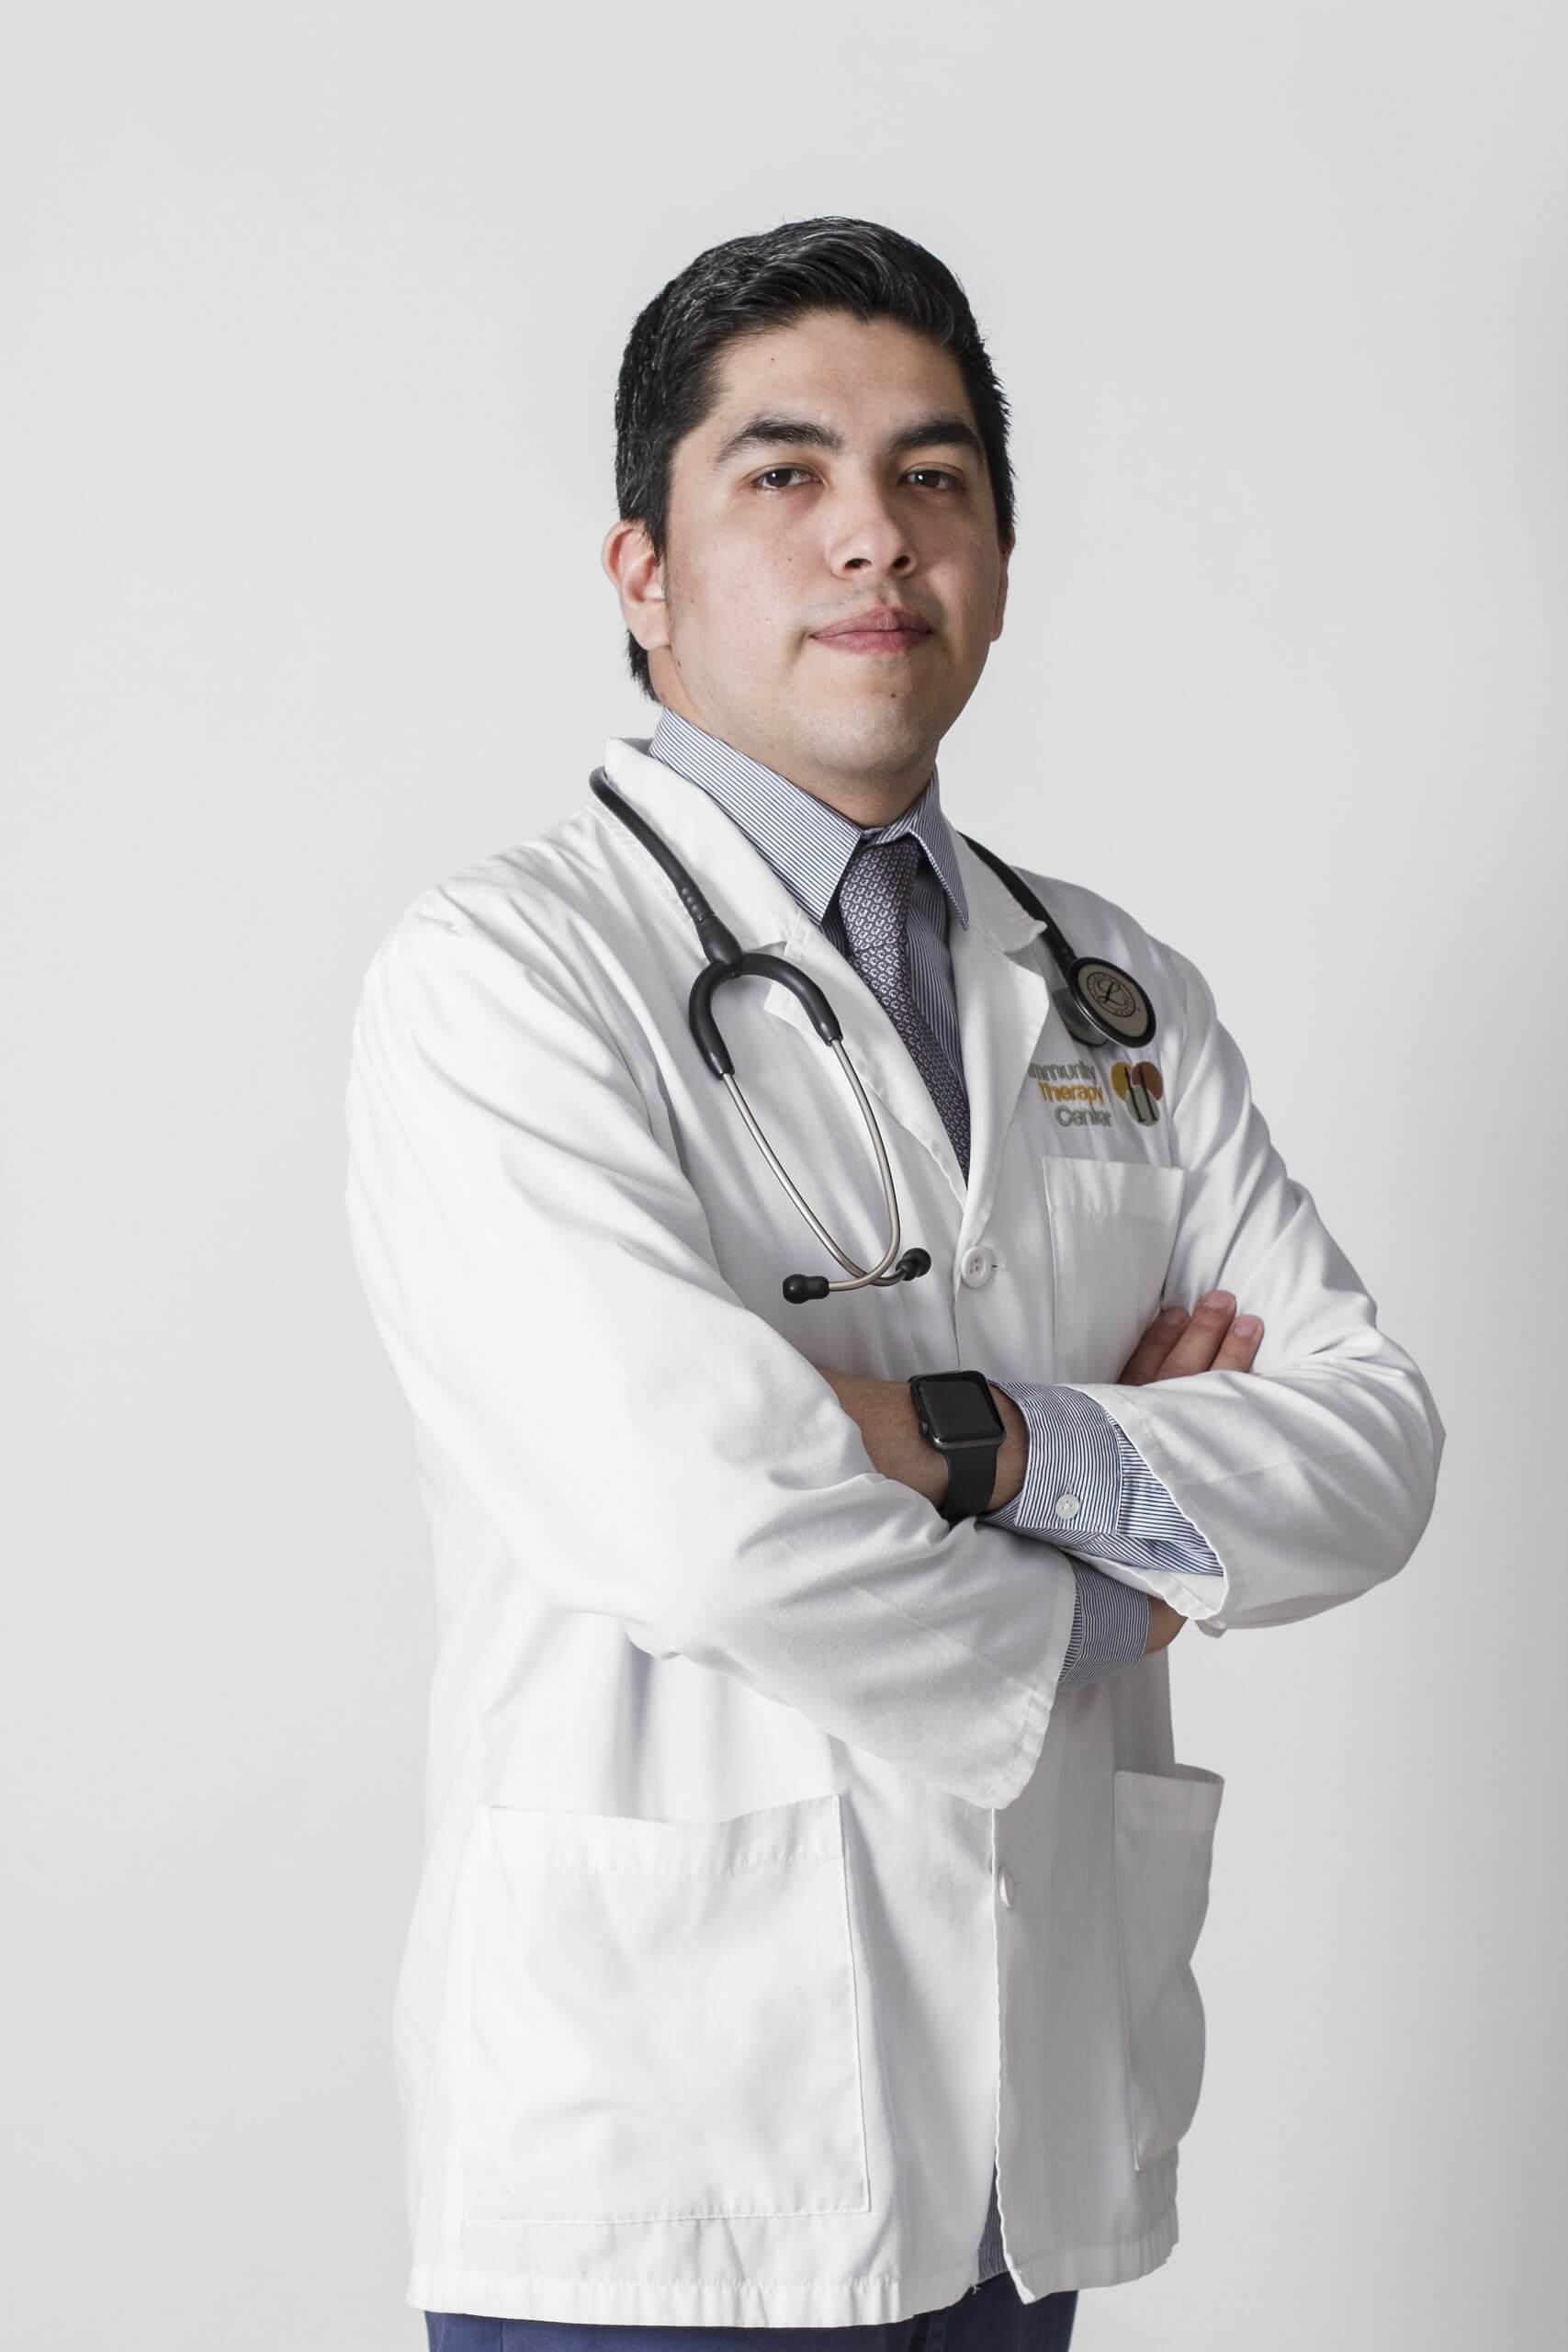 Dr. Javier Rivera, M.D.